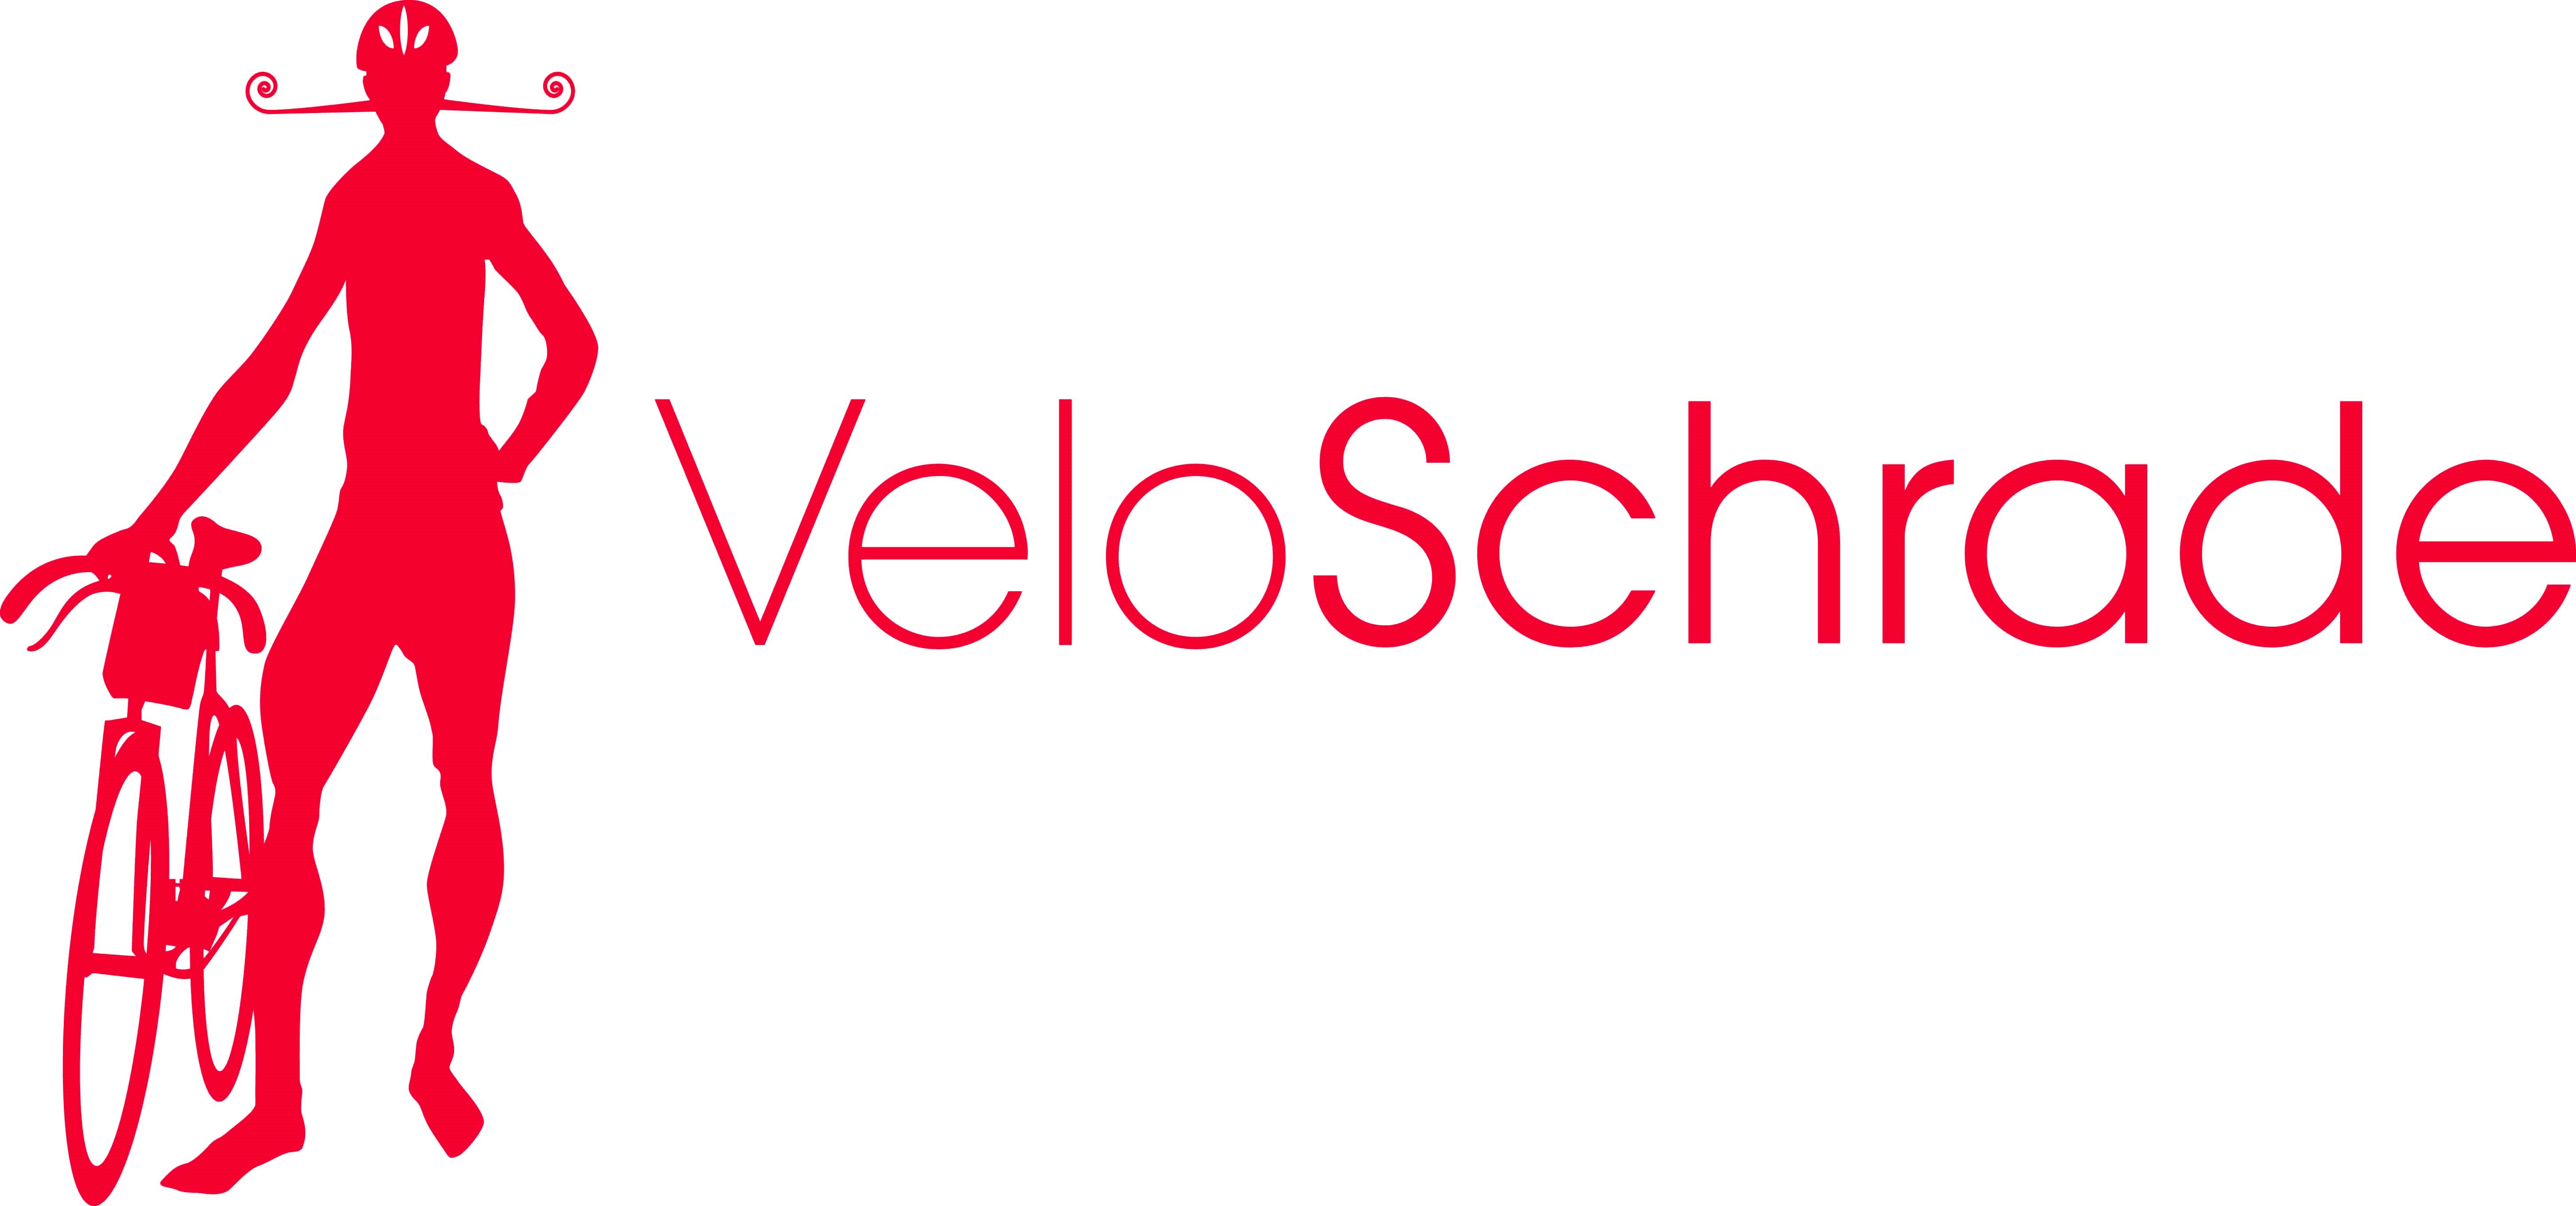 Logo Velo Schrade GmbH